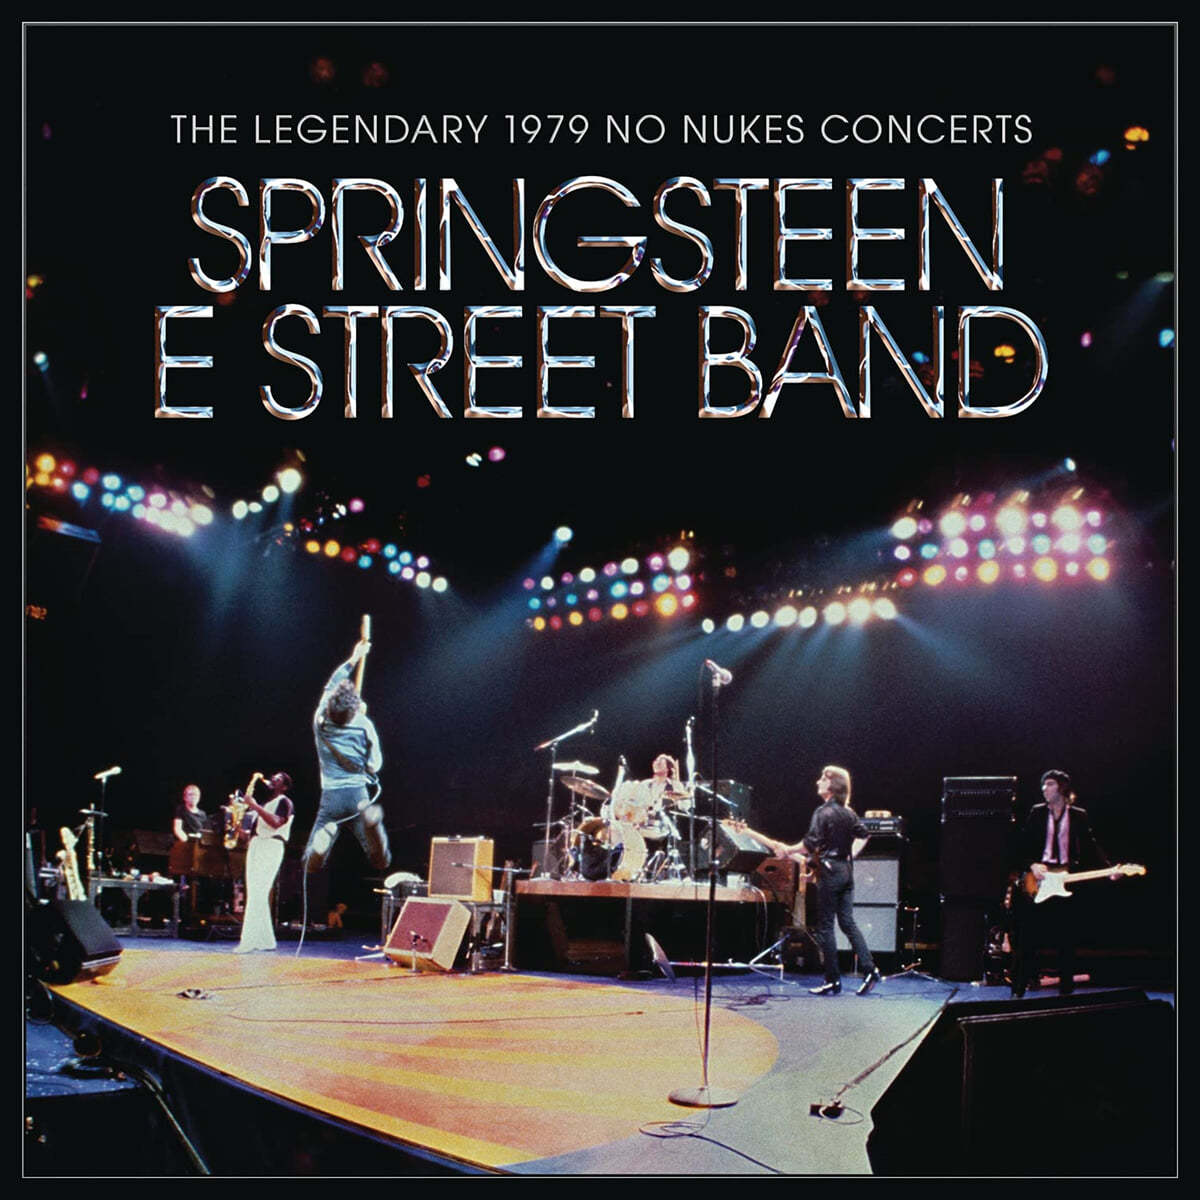 Bruce Springsteen / The E Street Band (브루스 스프링스틴 / 이 스트릿 밴드) - The Legendary 1979 No Nukes Concerts 